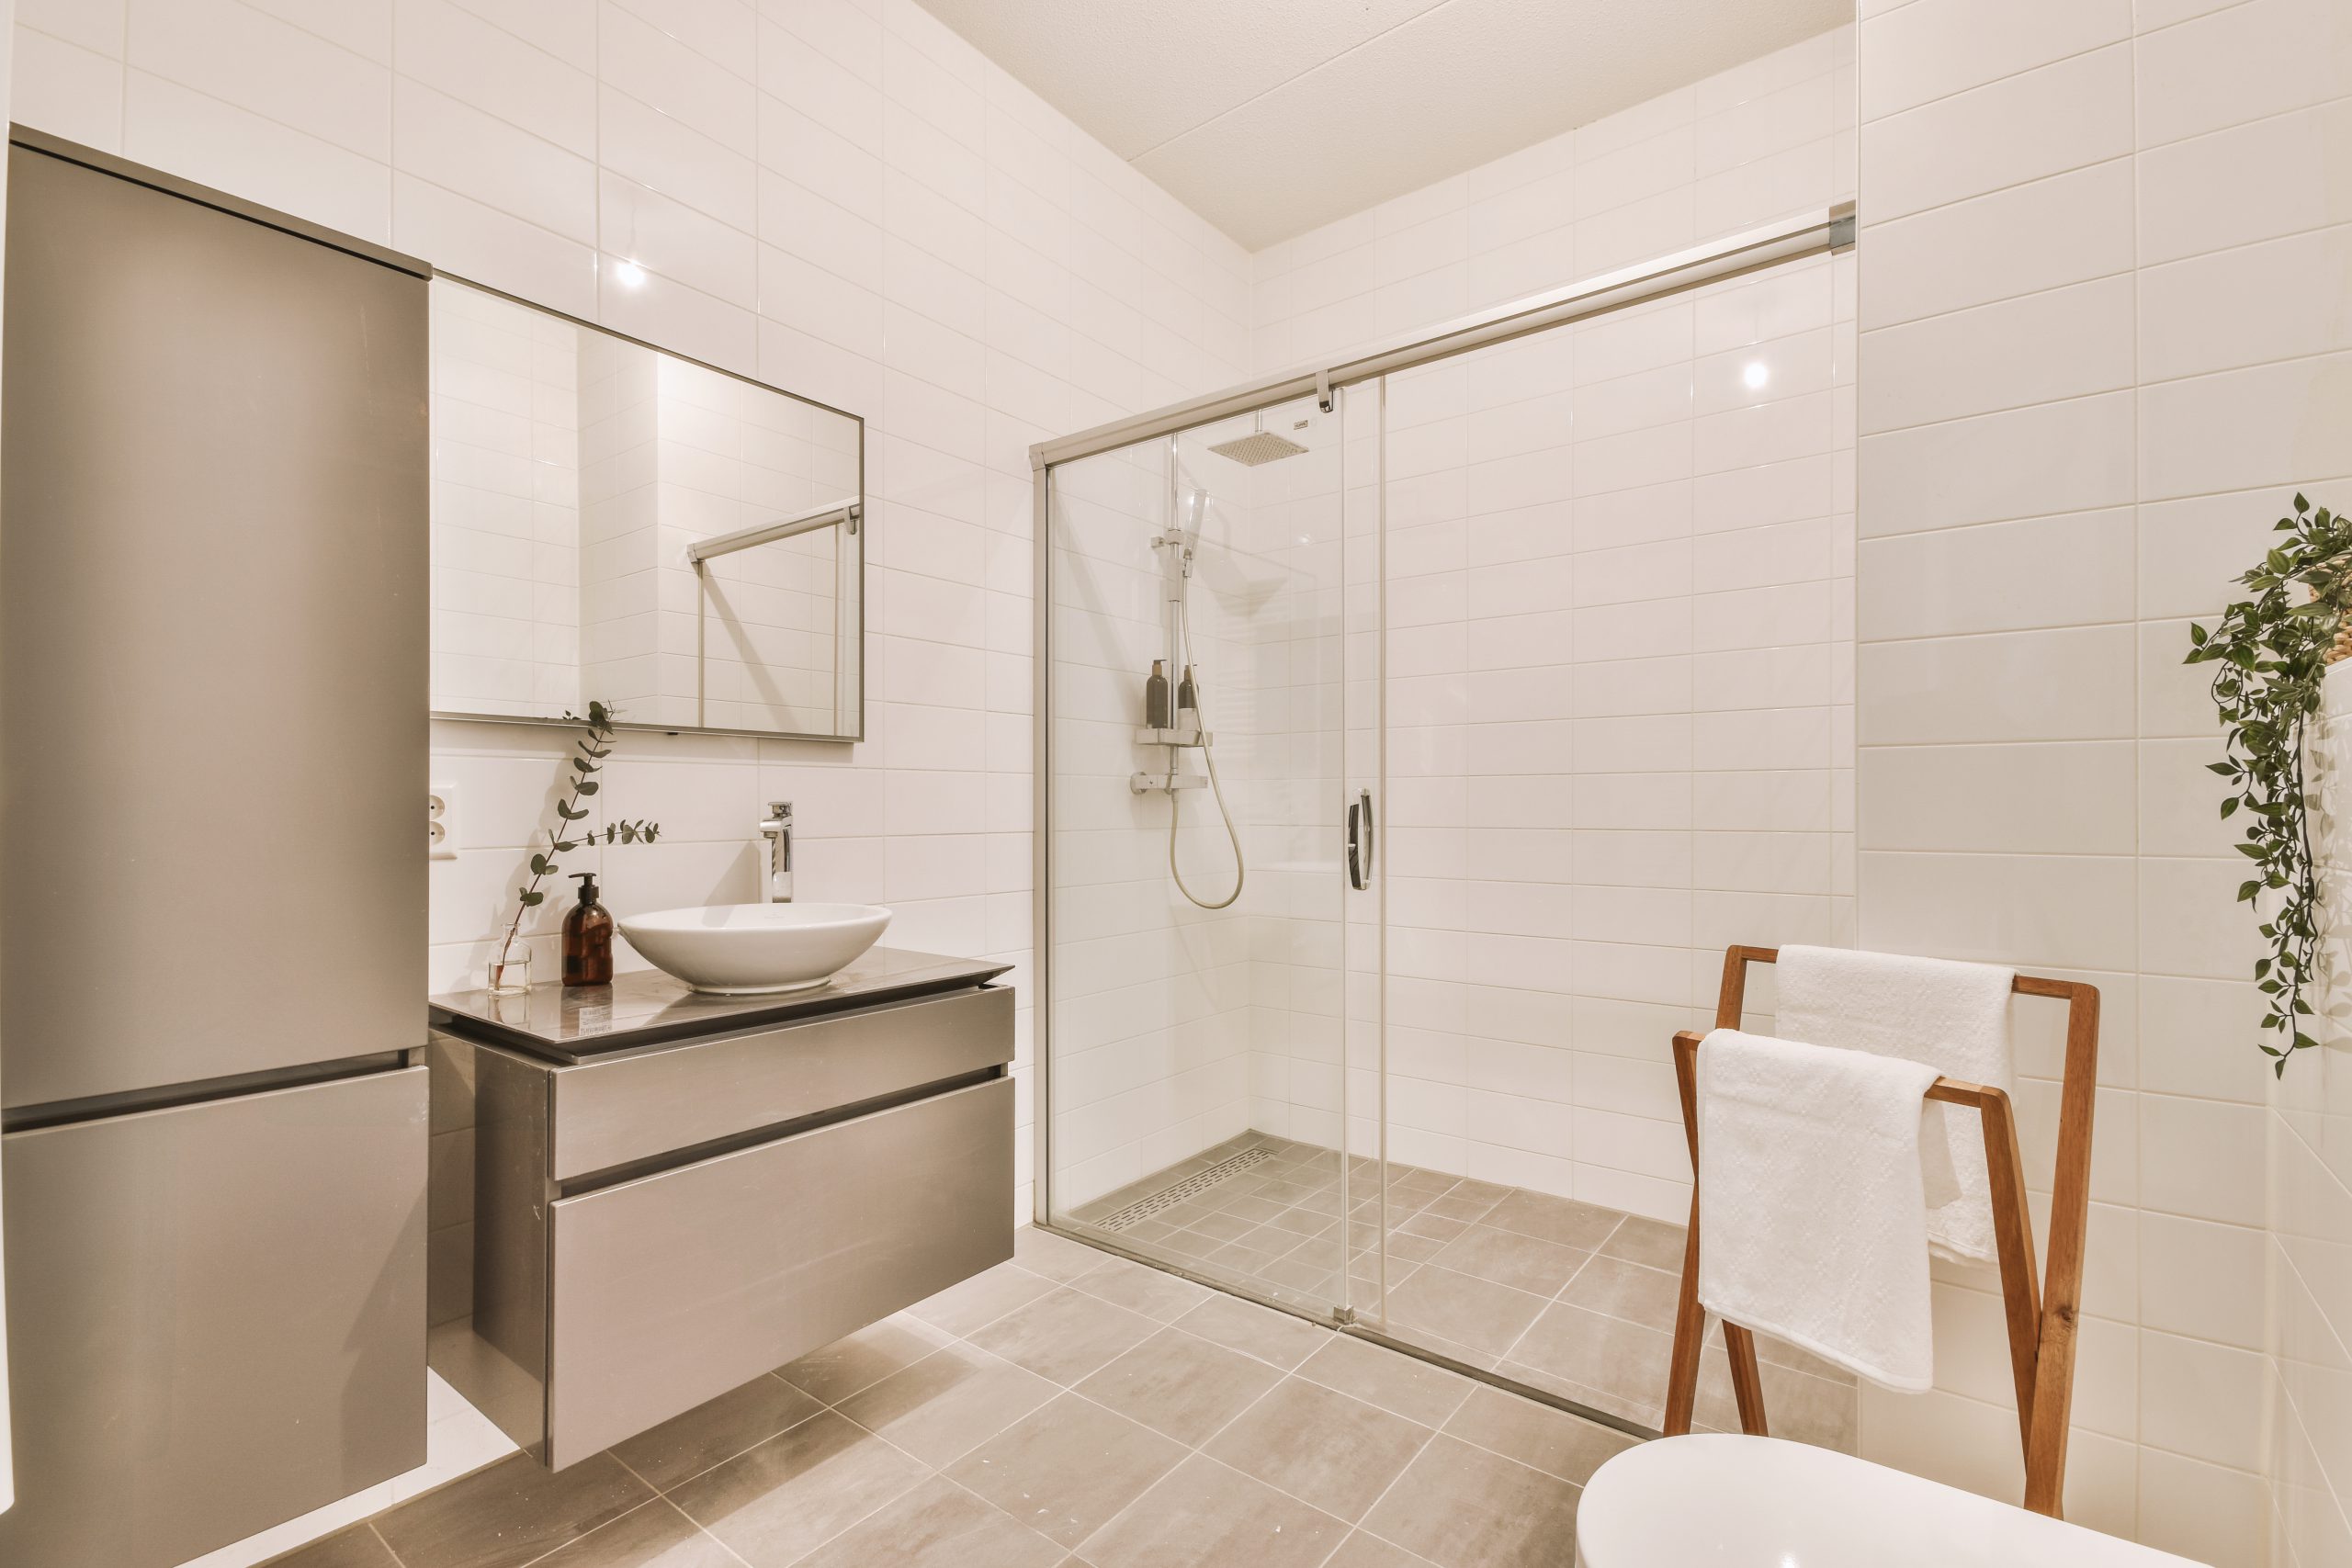 Bathroom With Grey Silver Cabinets